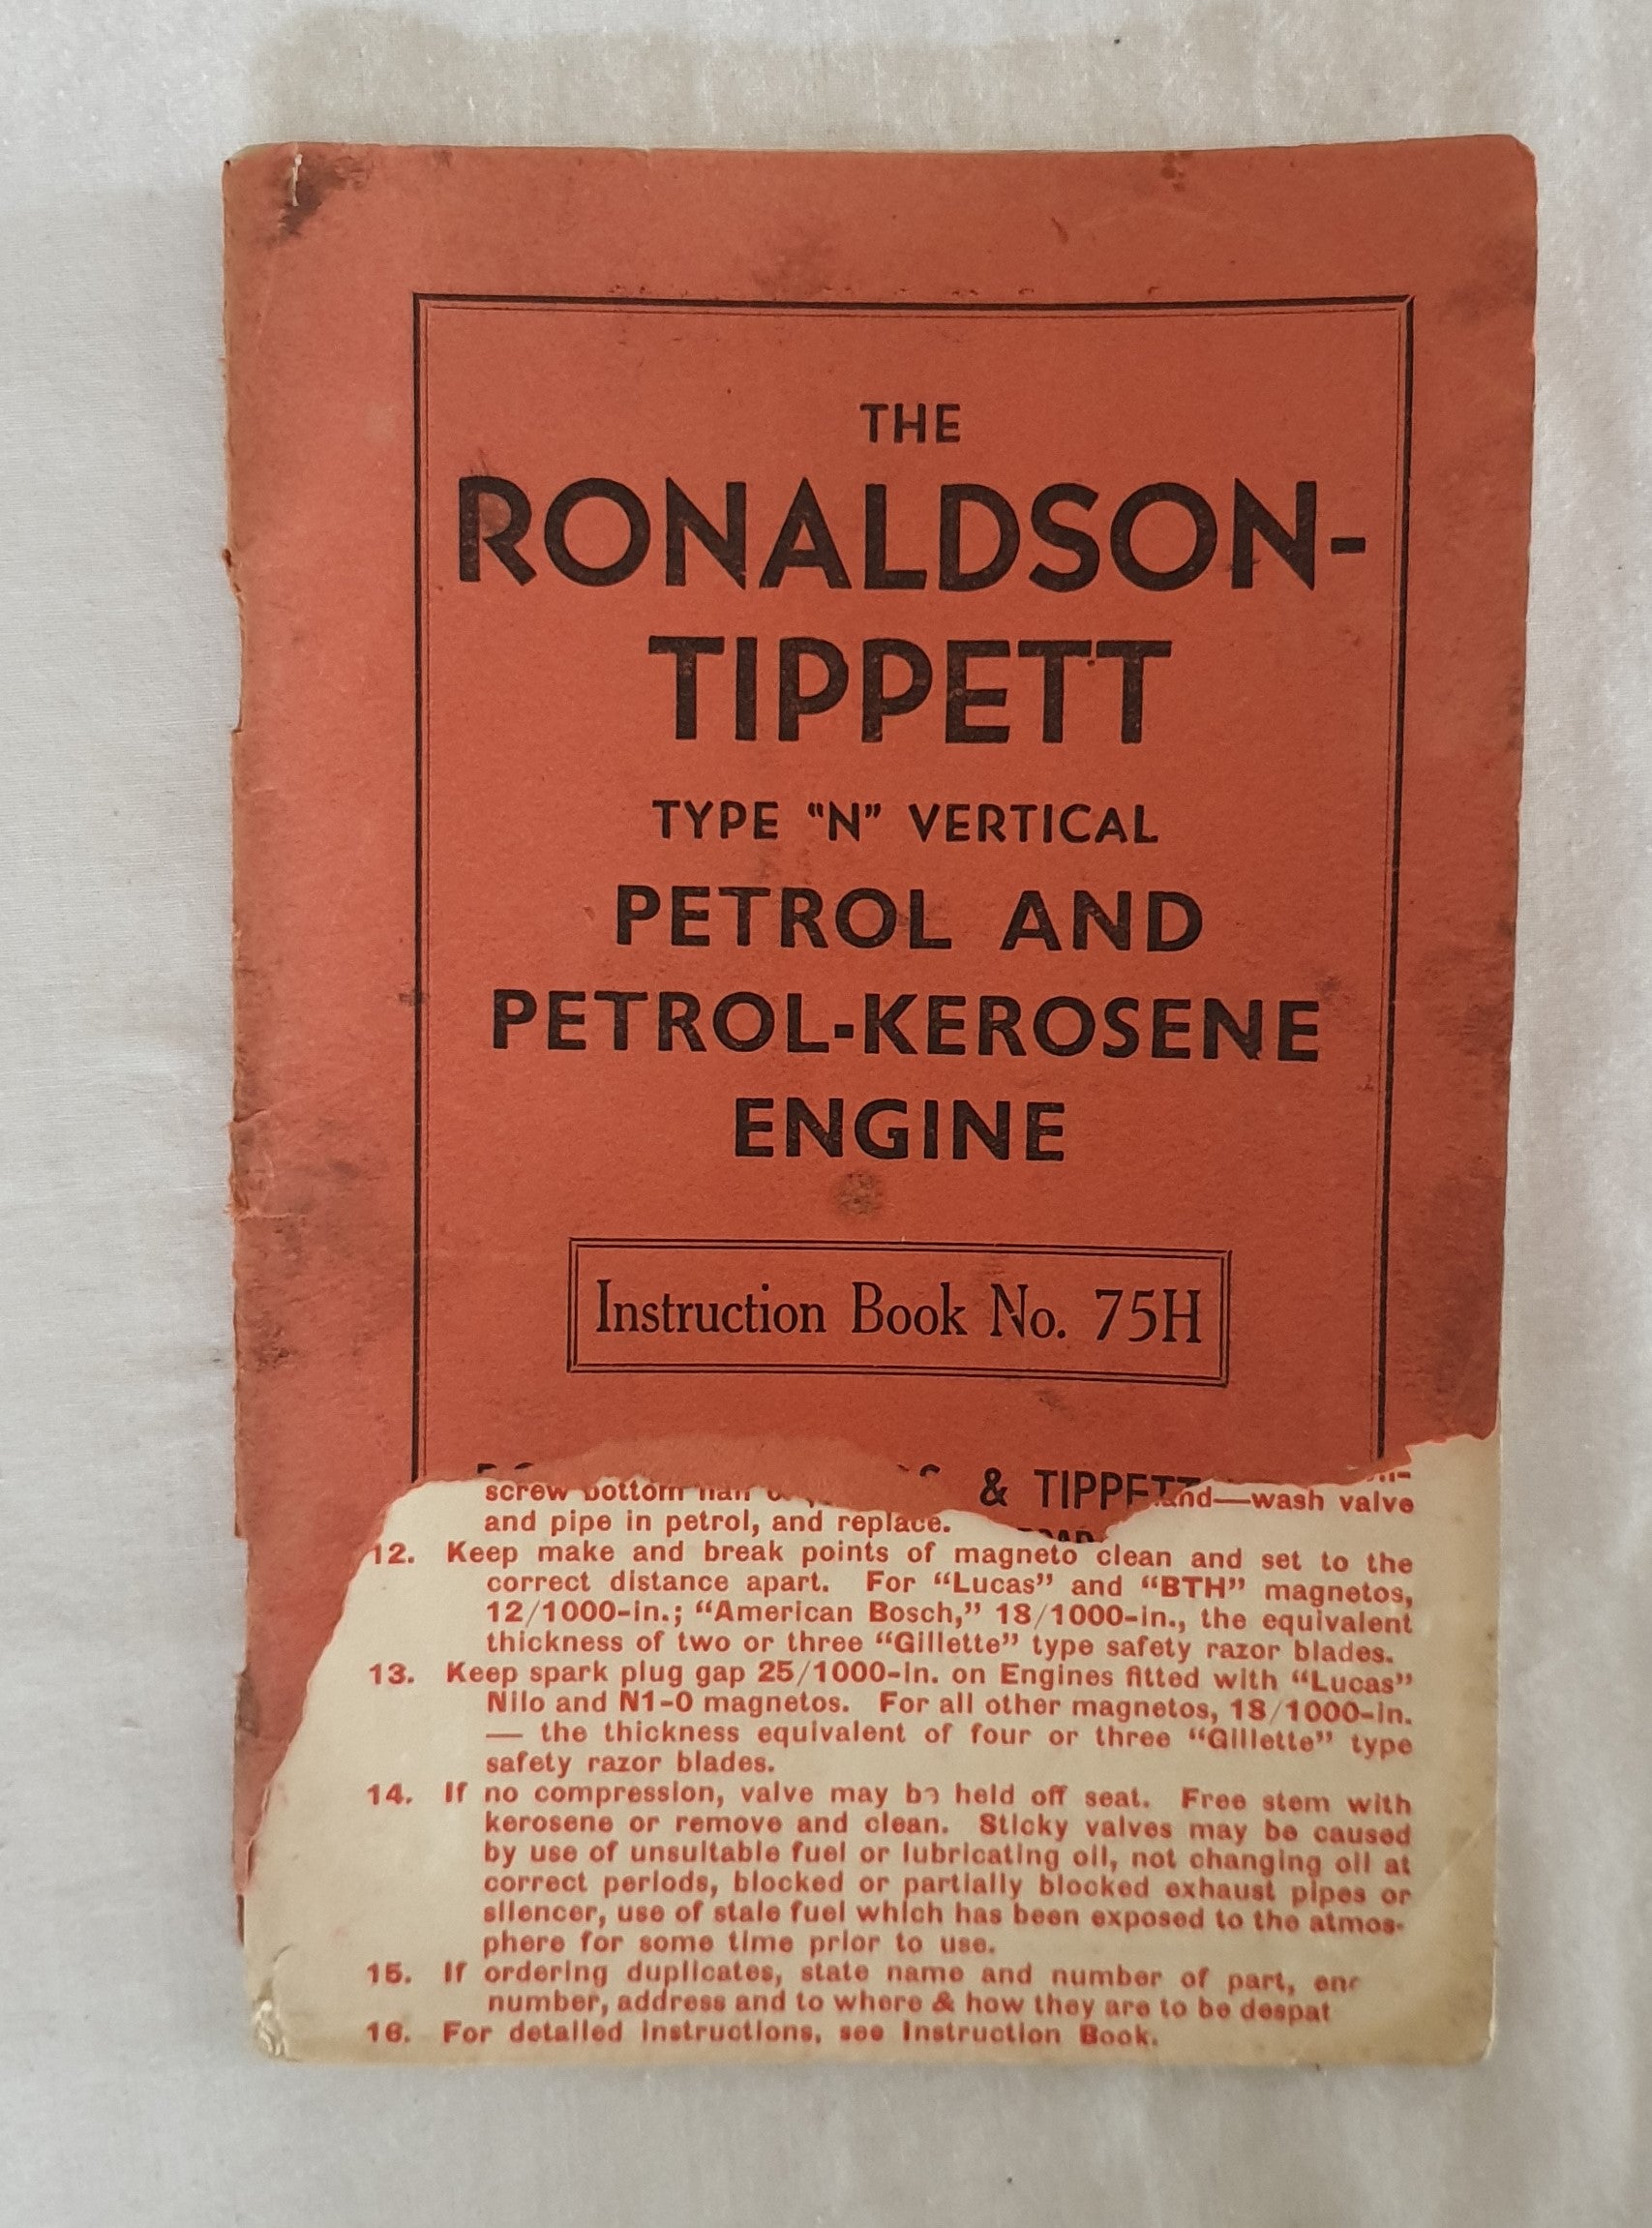 The Ronaldson-Tippett Type "N" Vertical and Petrol-Kerosene Engine